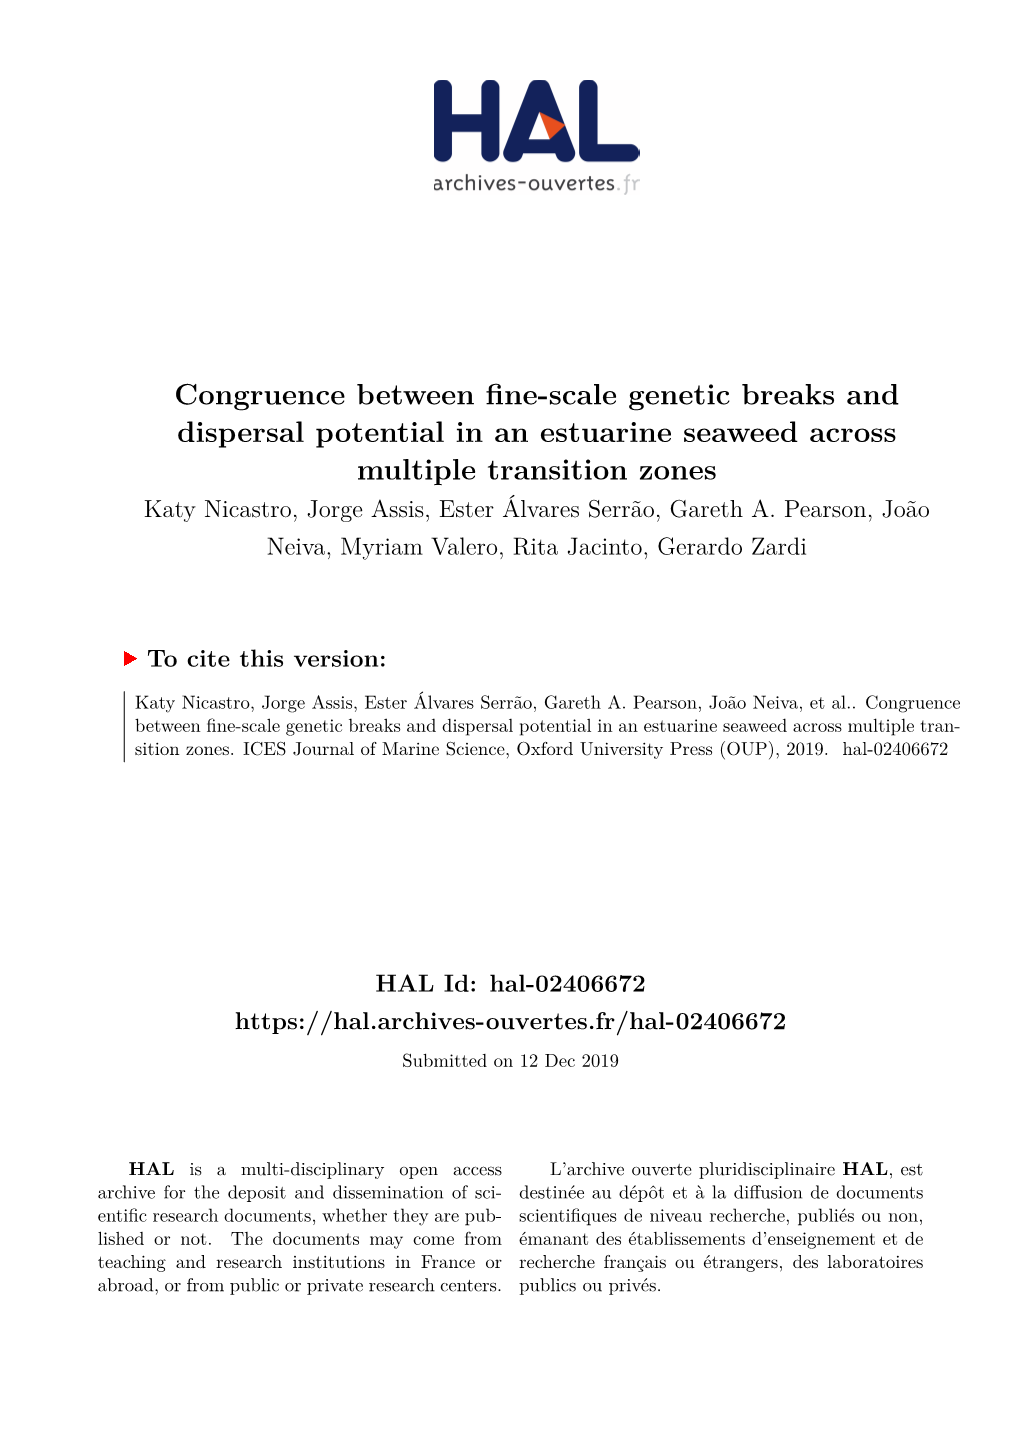 Congruence Between Fine-Scale Genetic Breaks and Dispersal